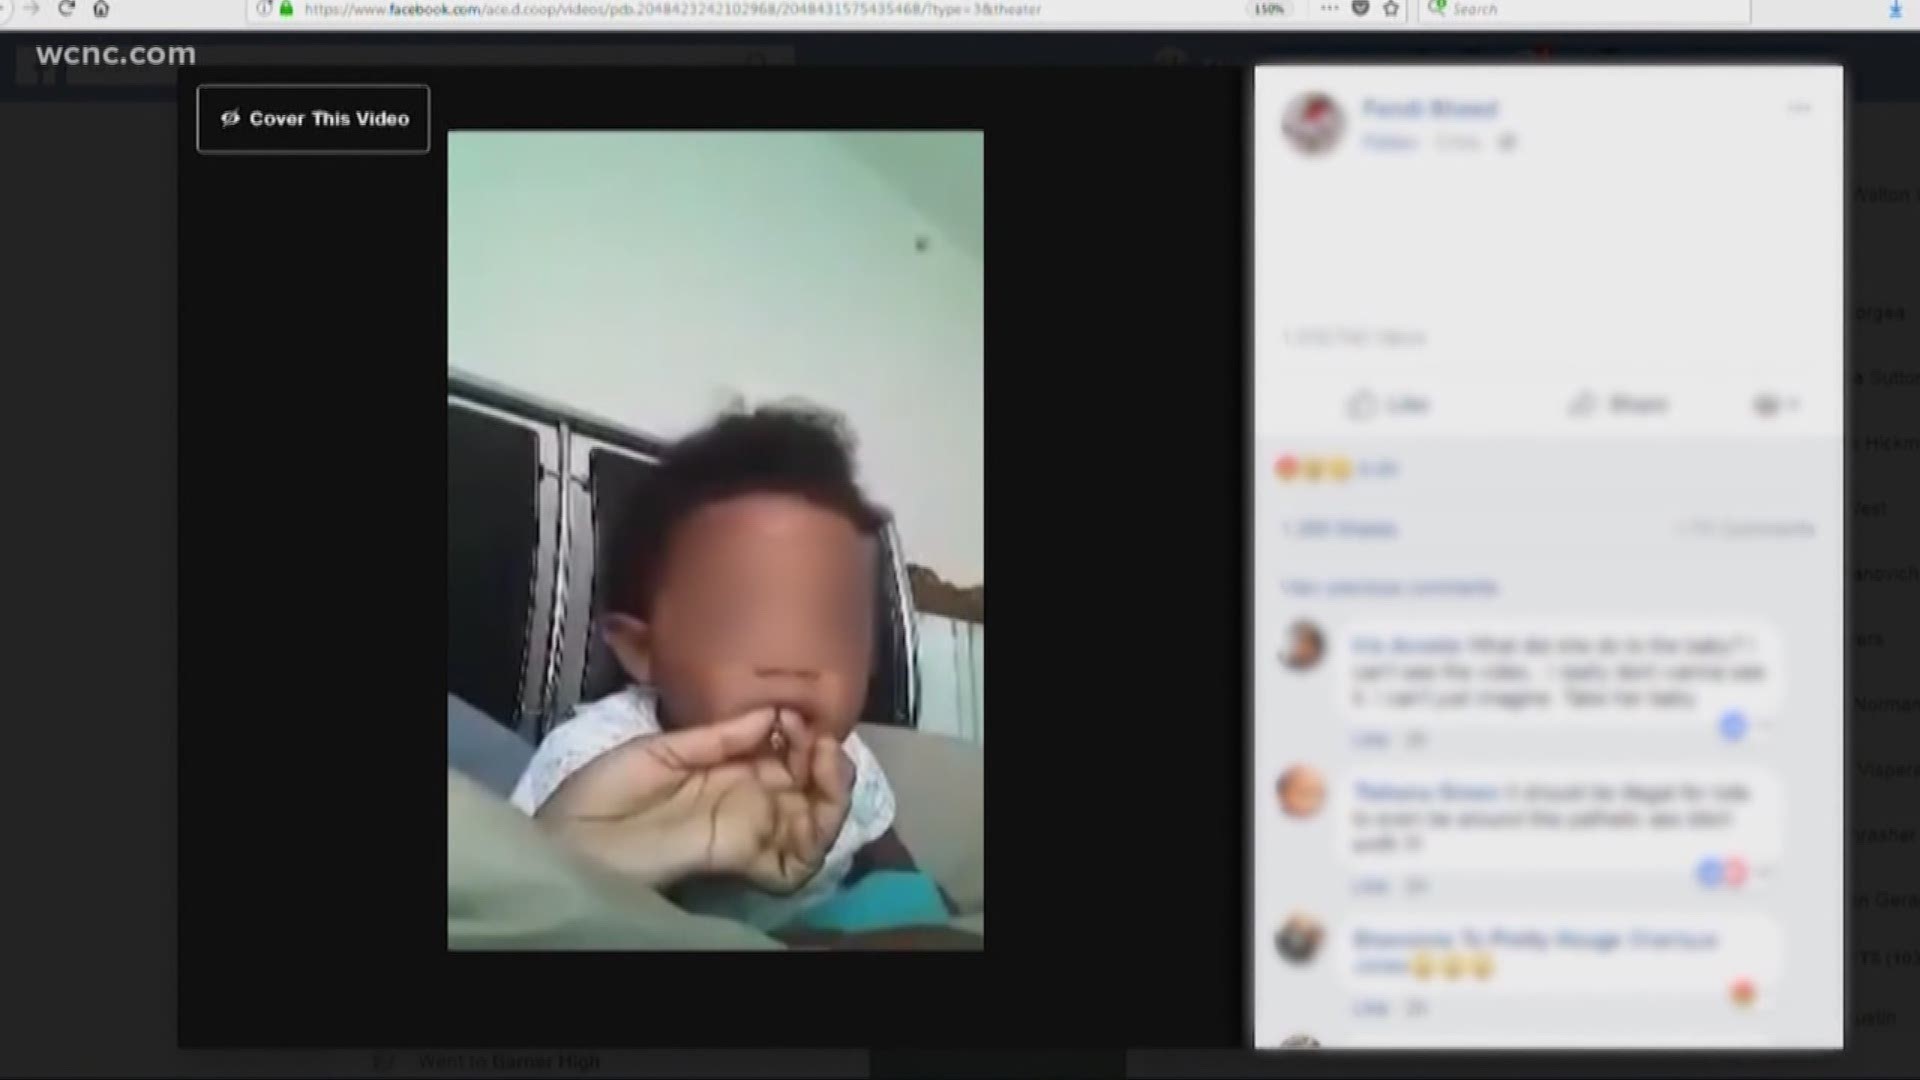 Facebook video shows baby smoking marijuana